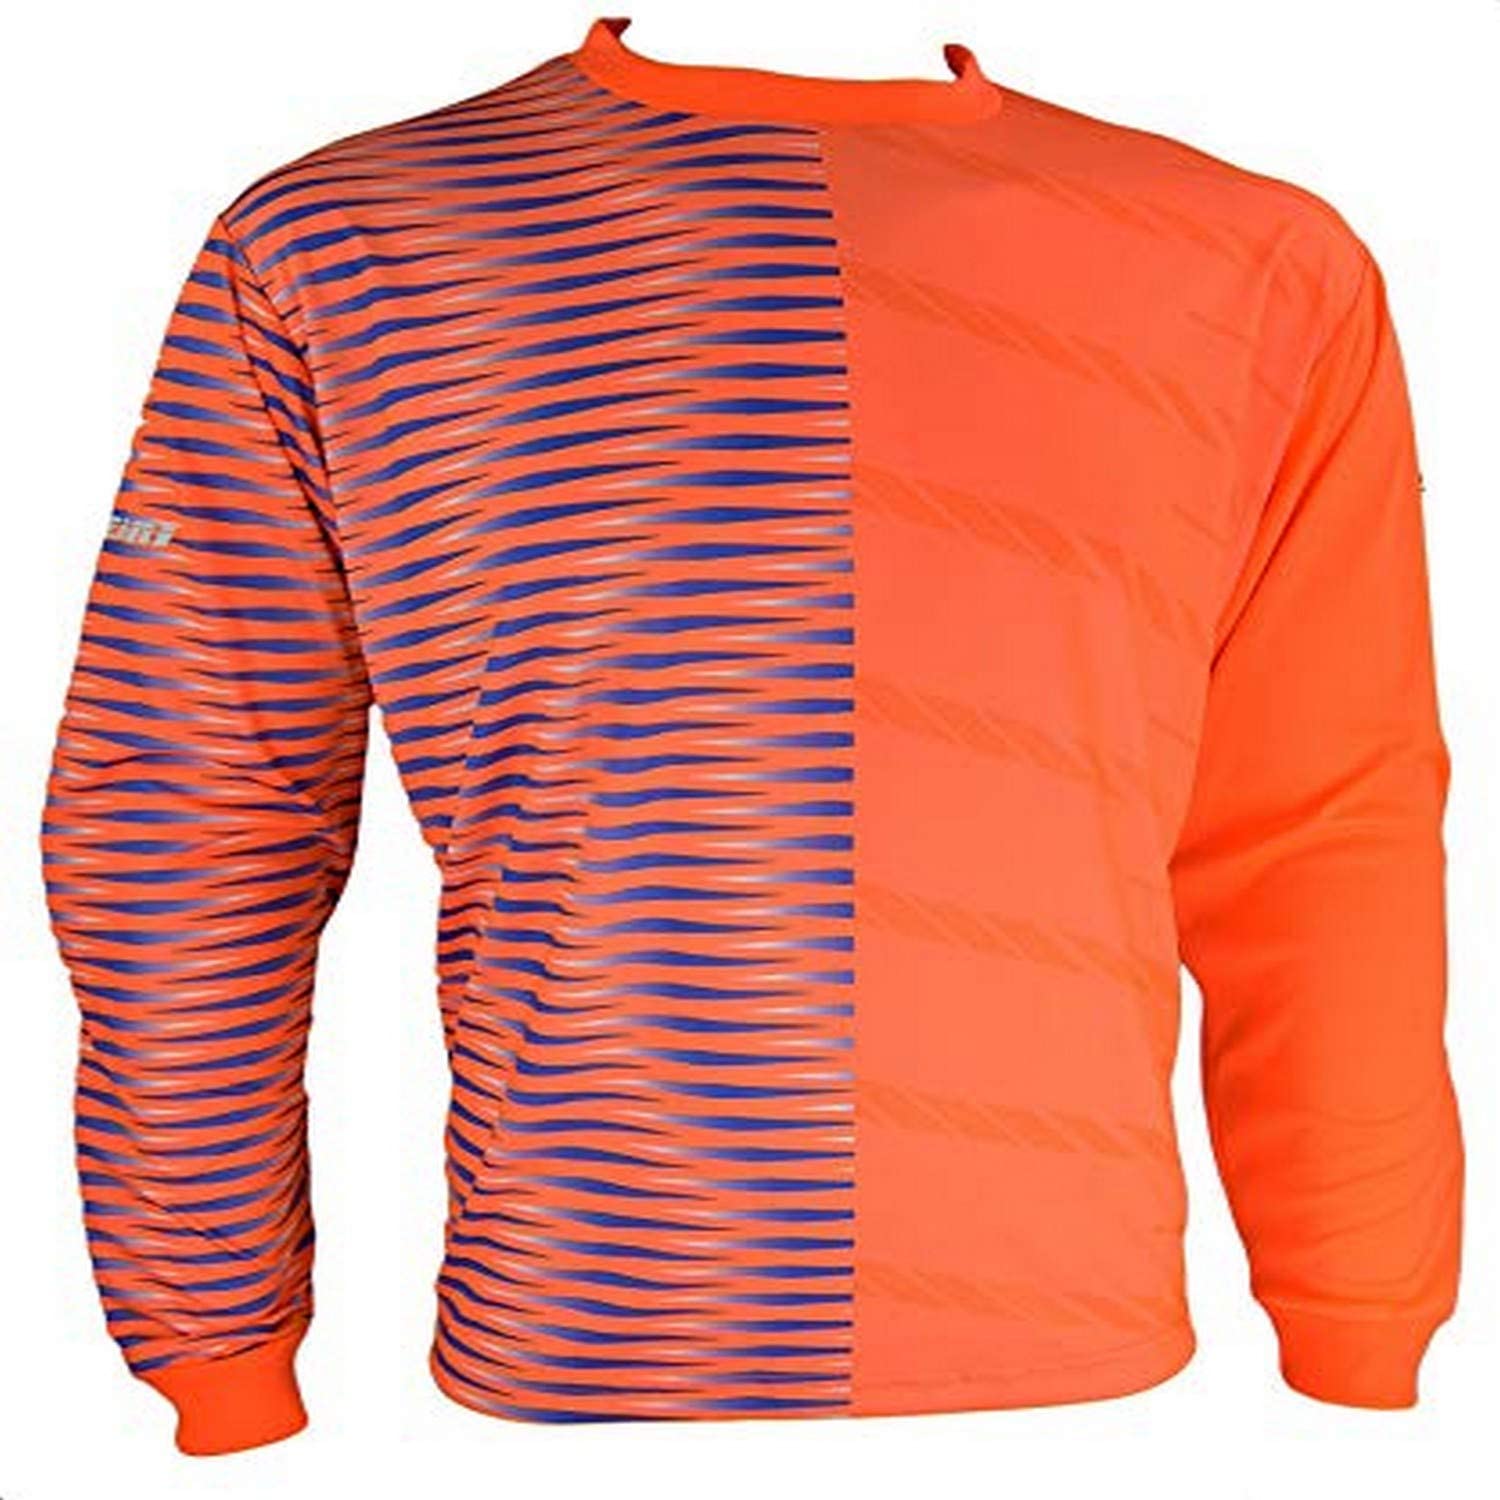 Portola Goalkeeper Jersey-Orange/Royal/Silver